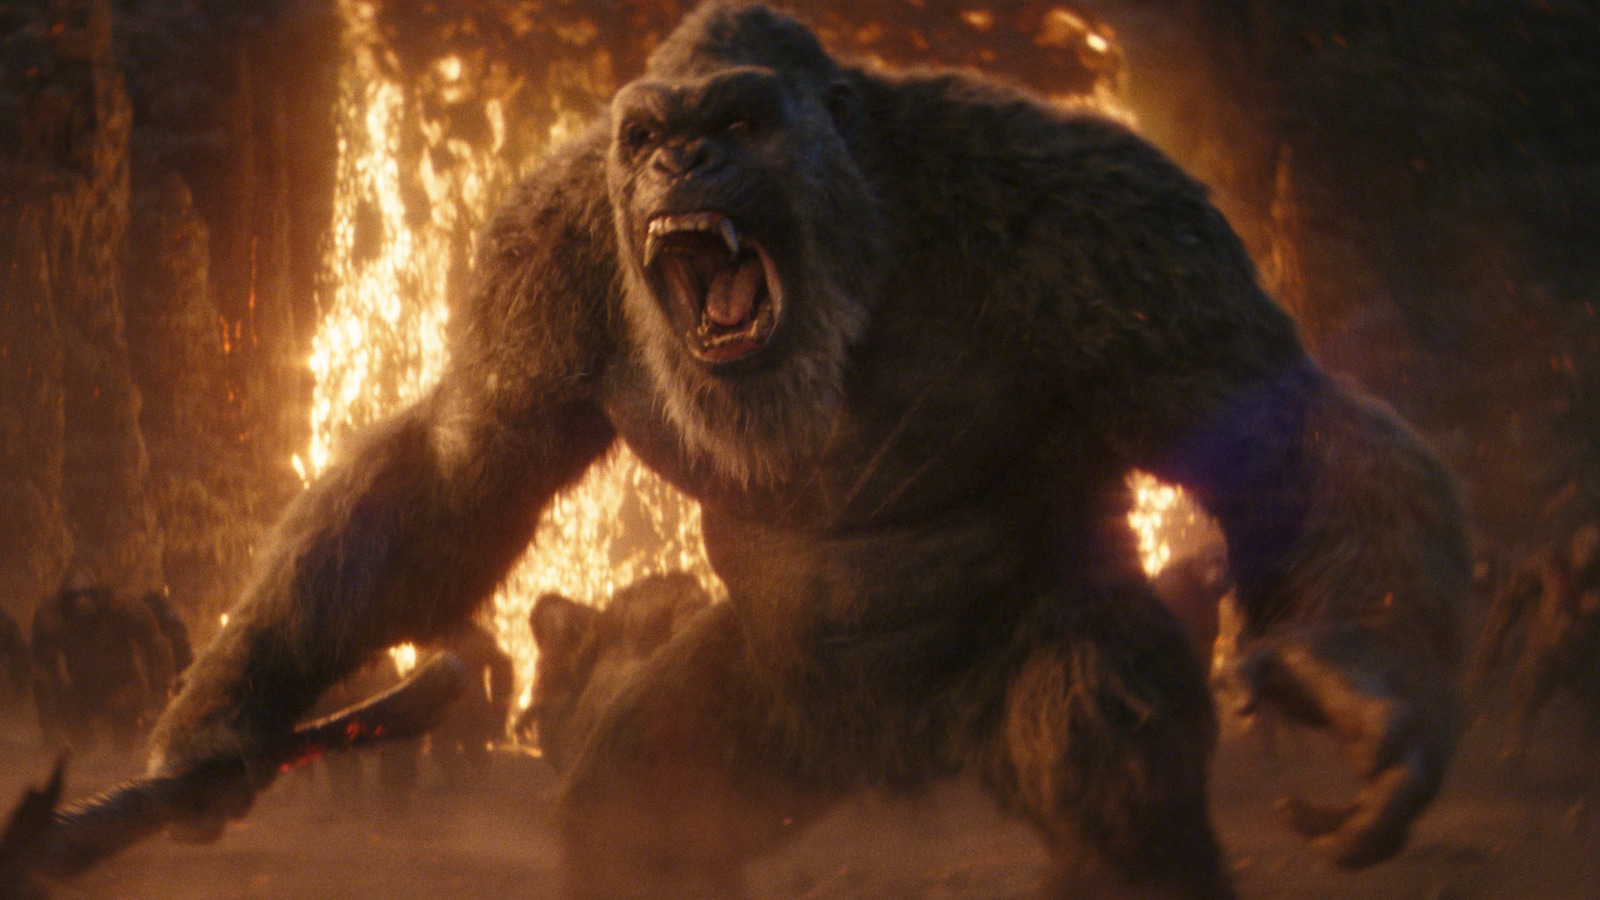 One Godzilla X Kong Battle Was Inspired By A Classic John Carpenter
Scene